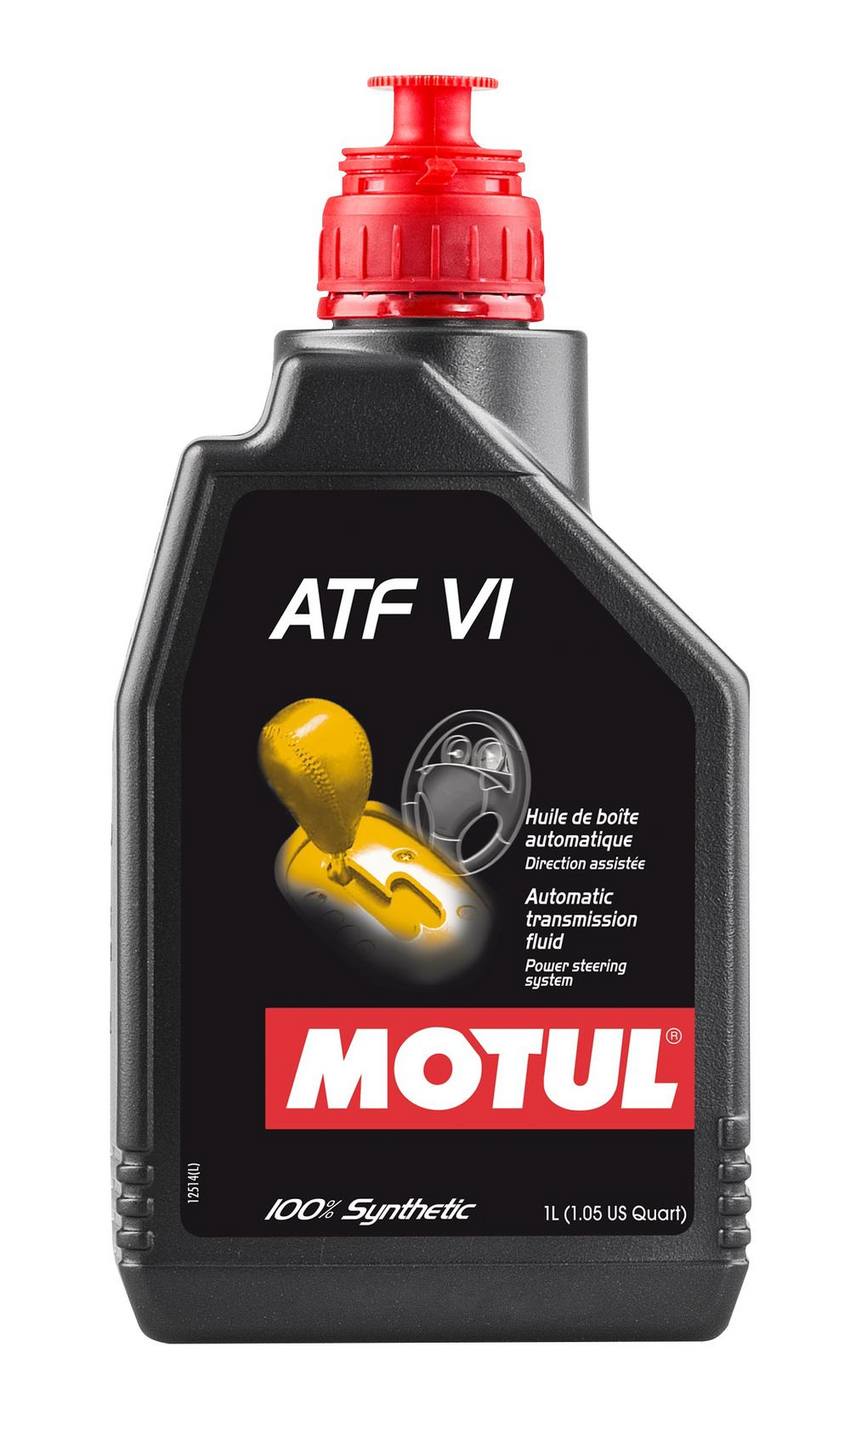 Auto Trans Fluid (ATF VI) (1 Liter)